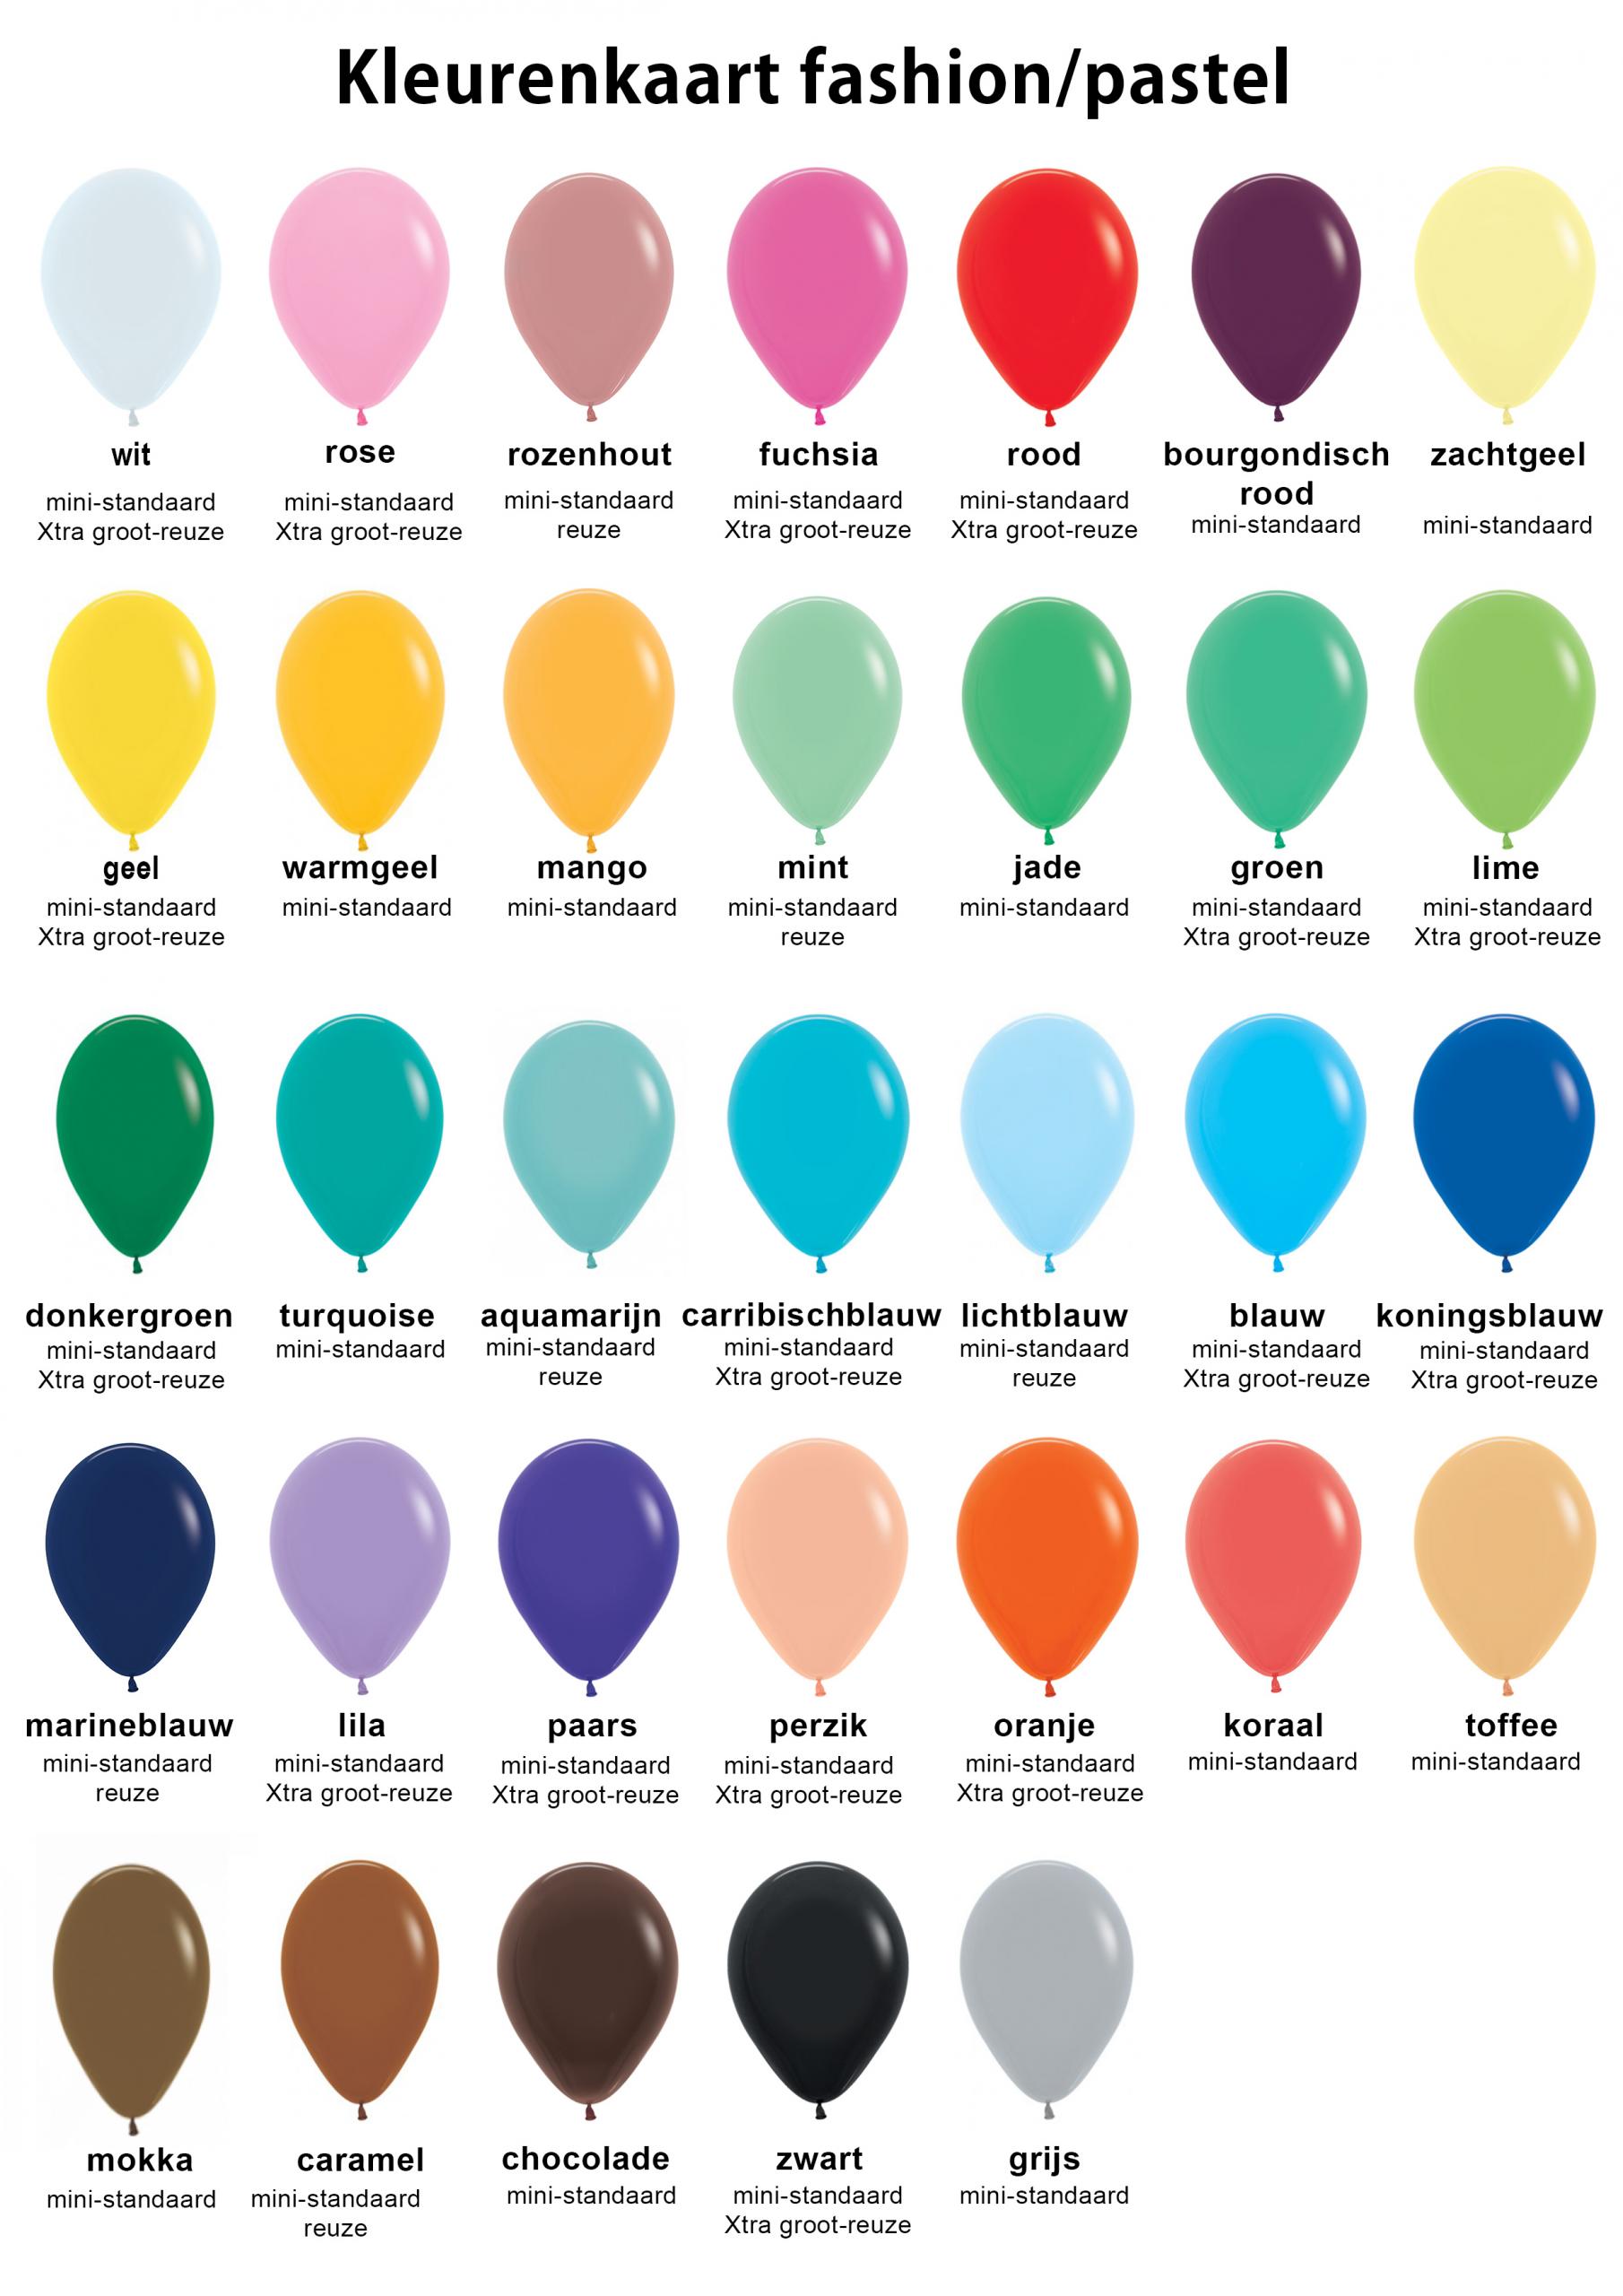 kleurenkaart fashion pastel met maten.jpg